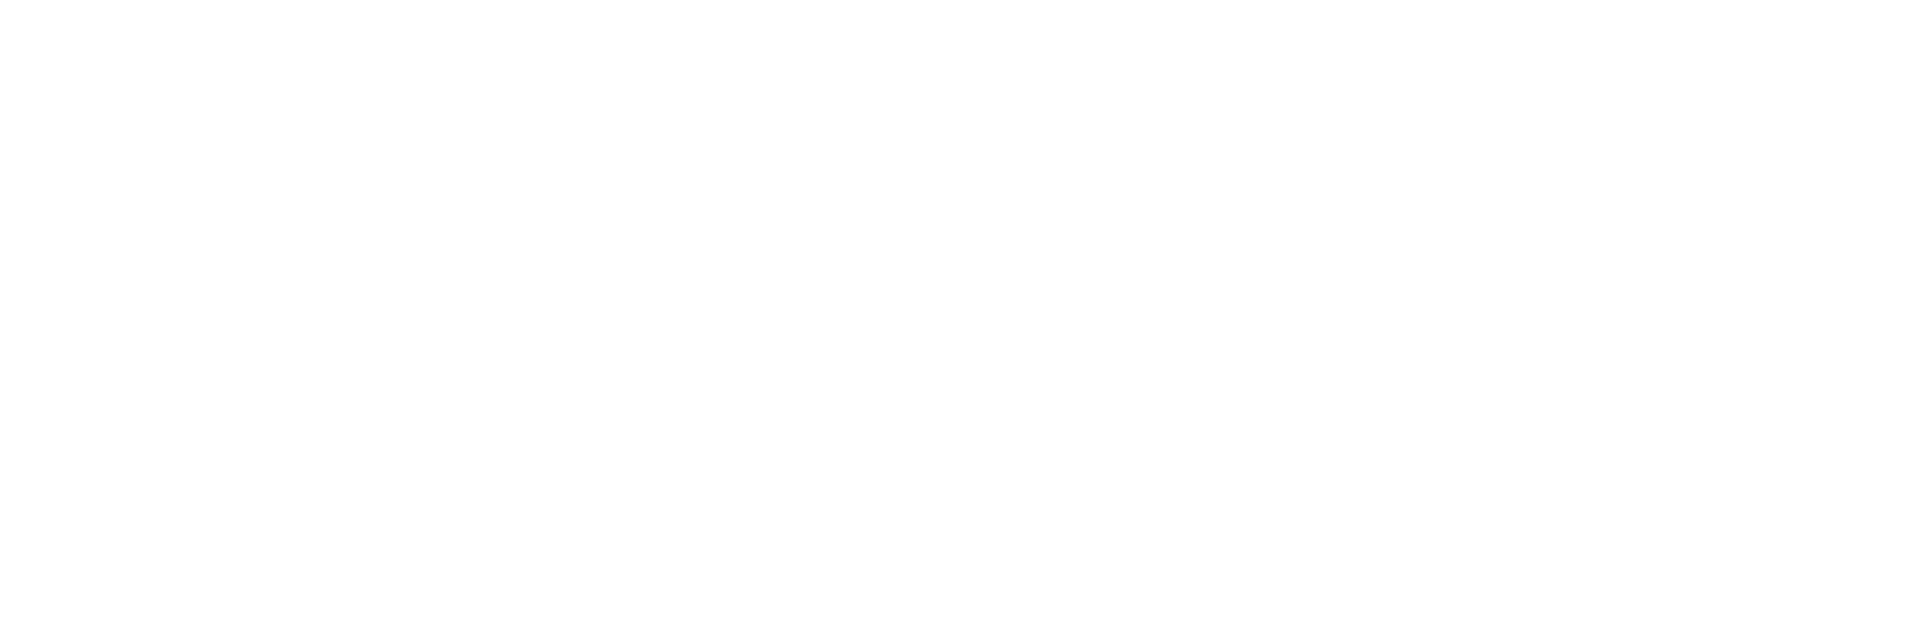 FCI Windows